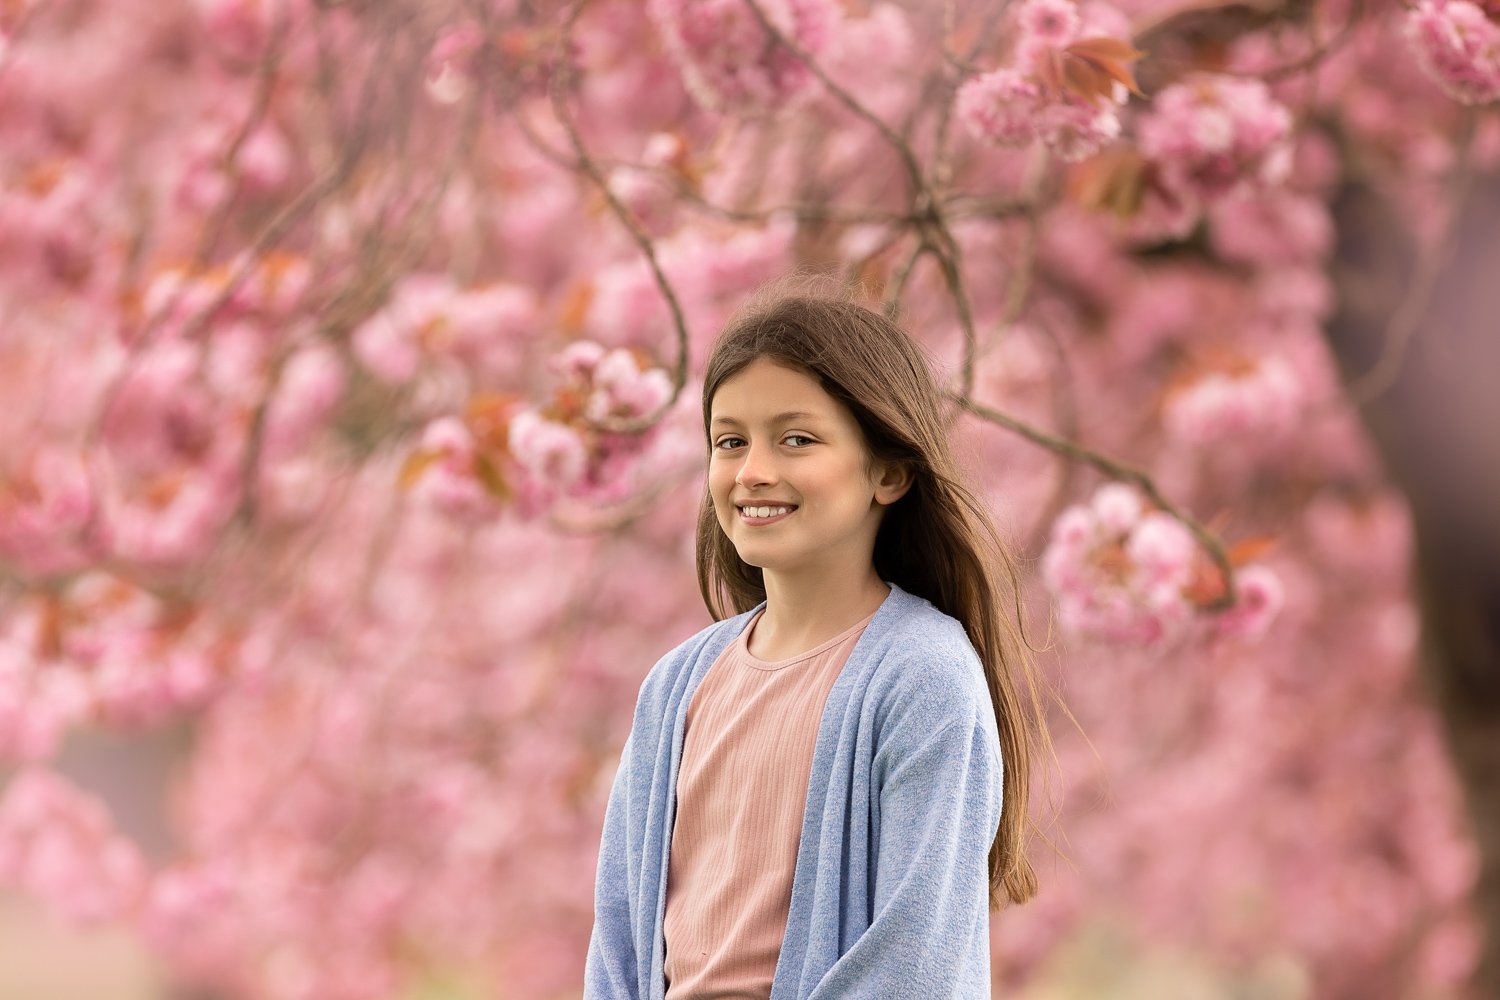 Cherry blossom child photoshoot in the Stray, Harrogate, Yorkshire